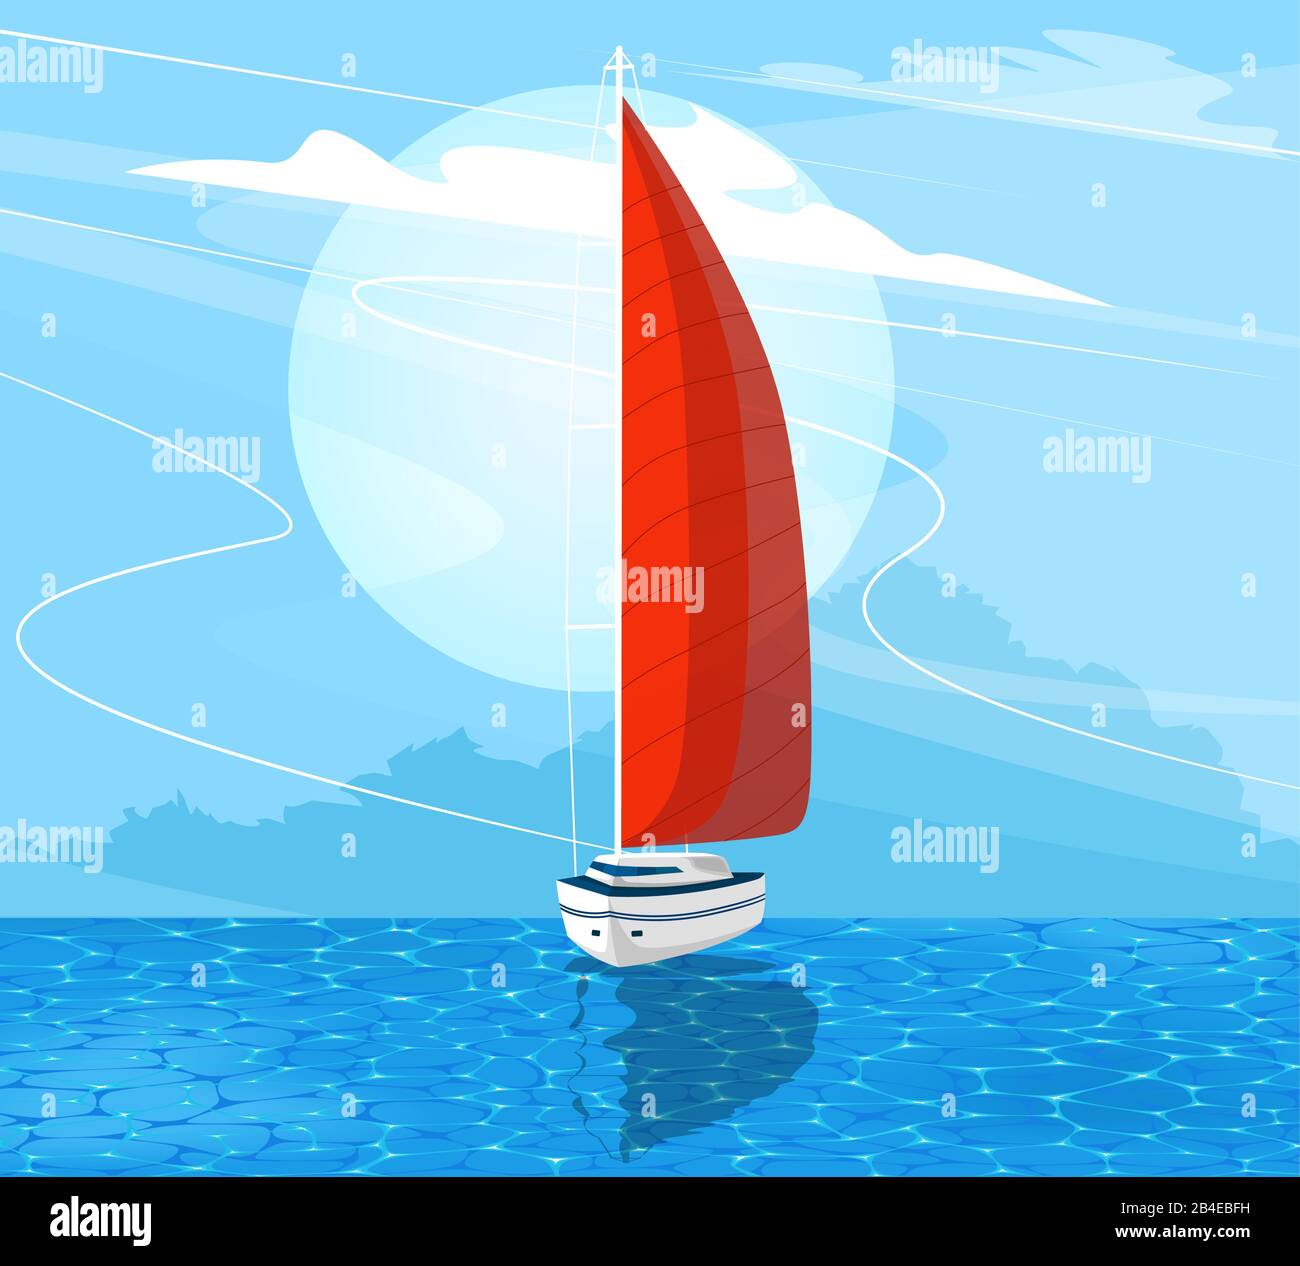 Sailing ship banner in cartoon style Stock Vector